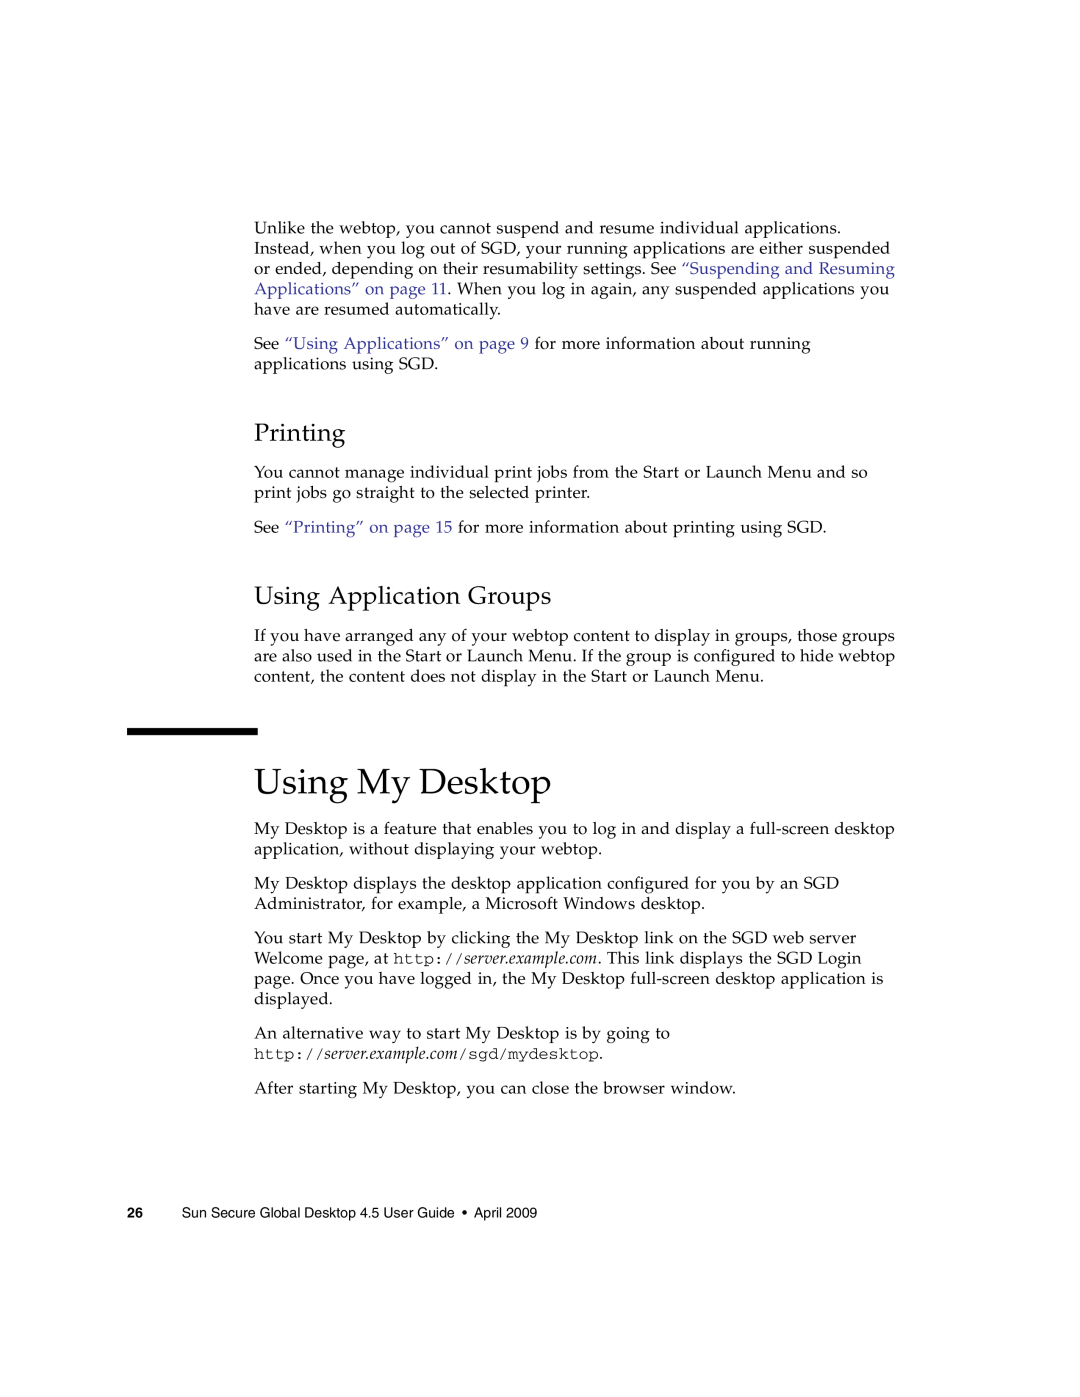 Sun Microsystems 4.5 manual Using My Desktop, Printing, Using Application Groups 